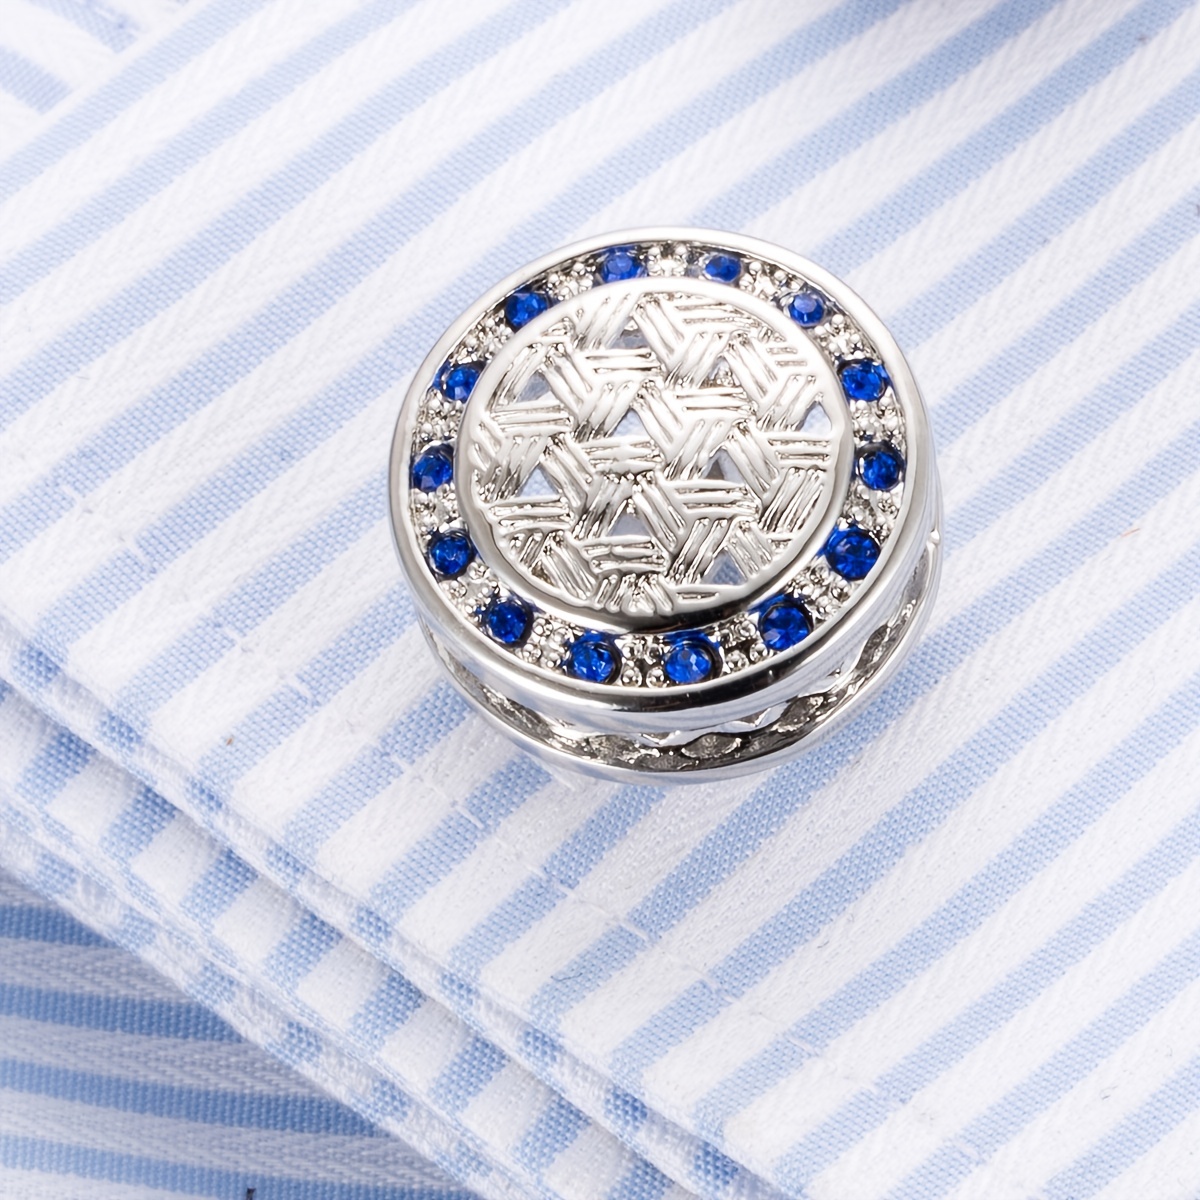 Men's Business Dress French Shirt Round Hollow Blue Crystal Cufflinks